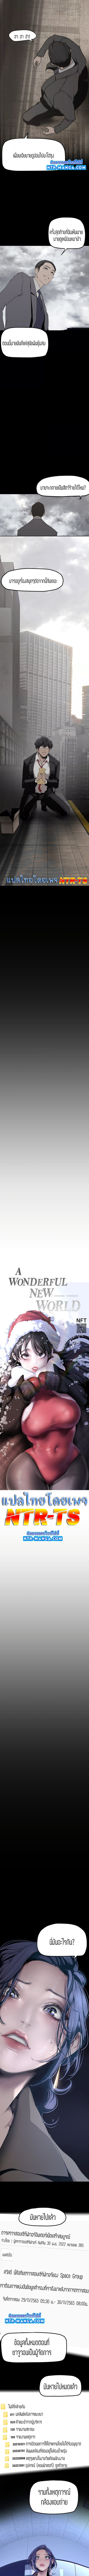 A Wonderful New World 3